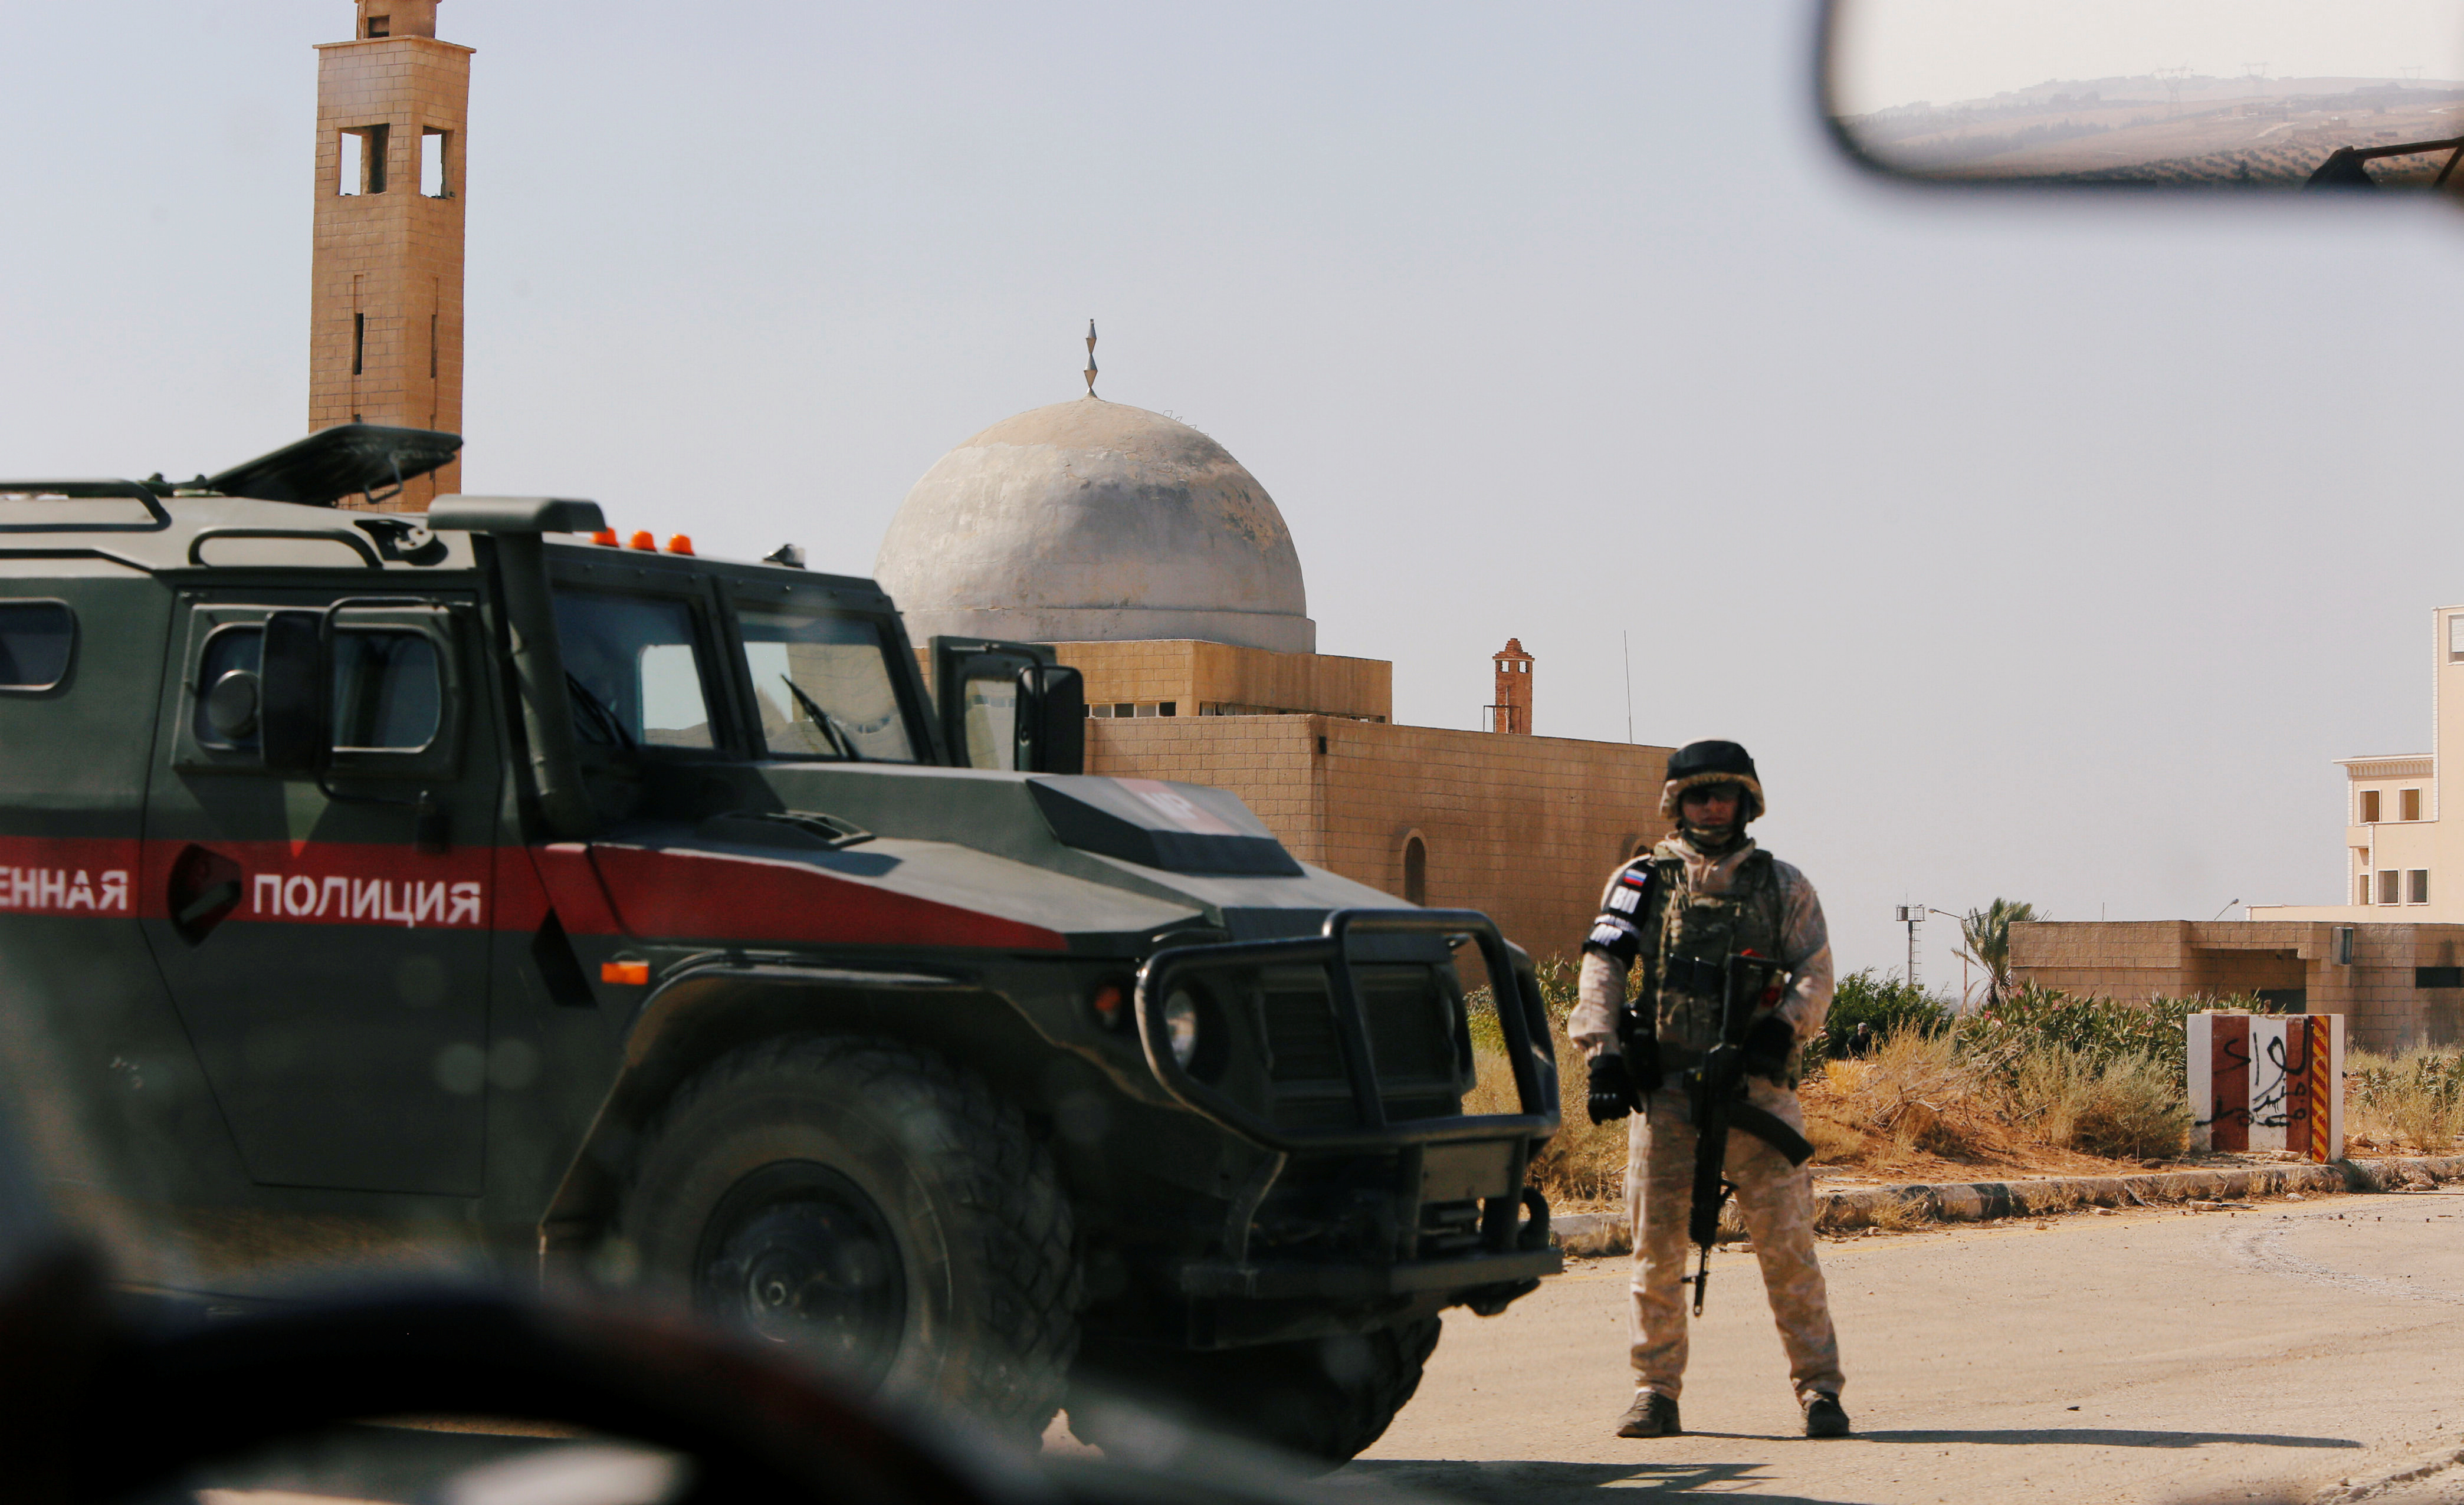 A Russian soldier is seen near the Nasib border crossing with Jordan in Deraa